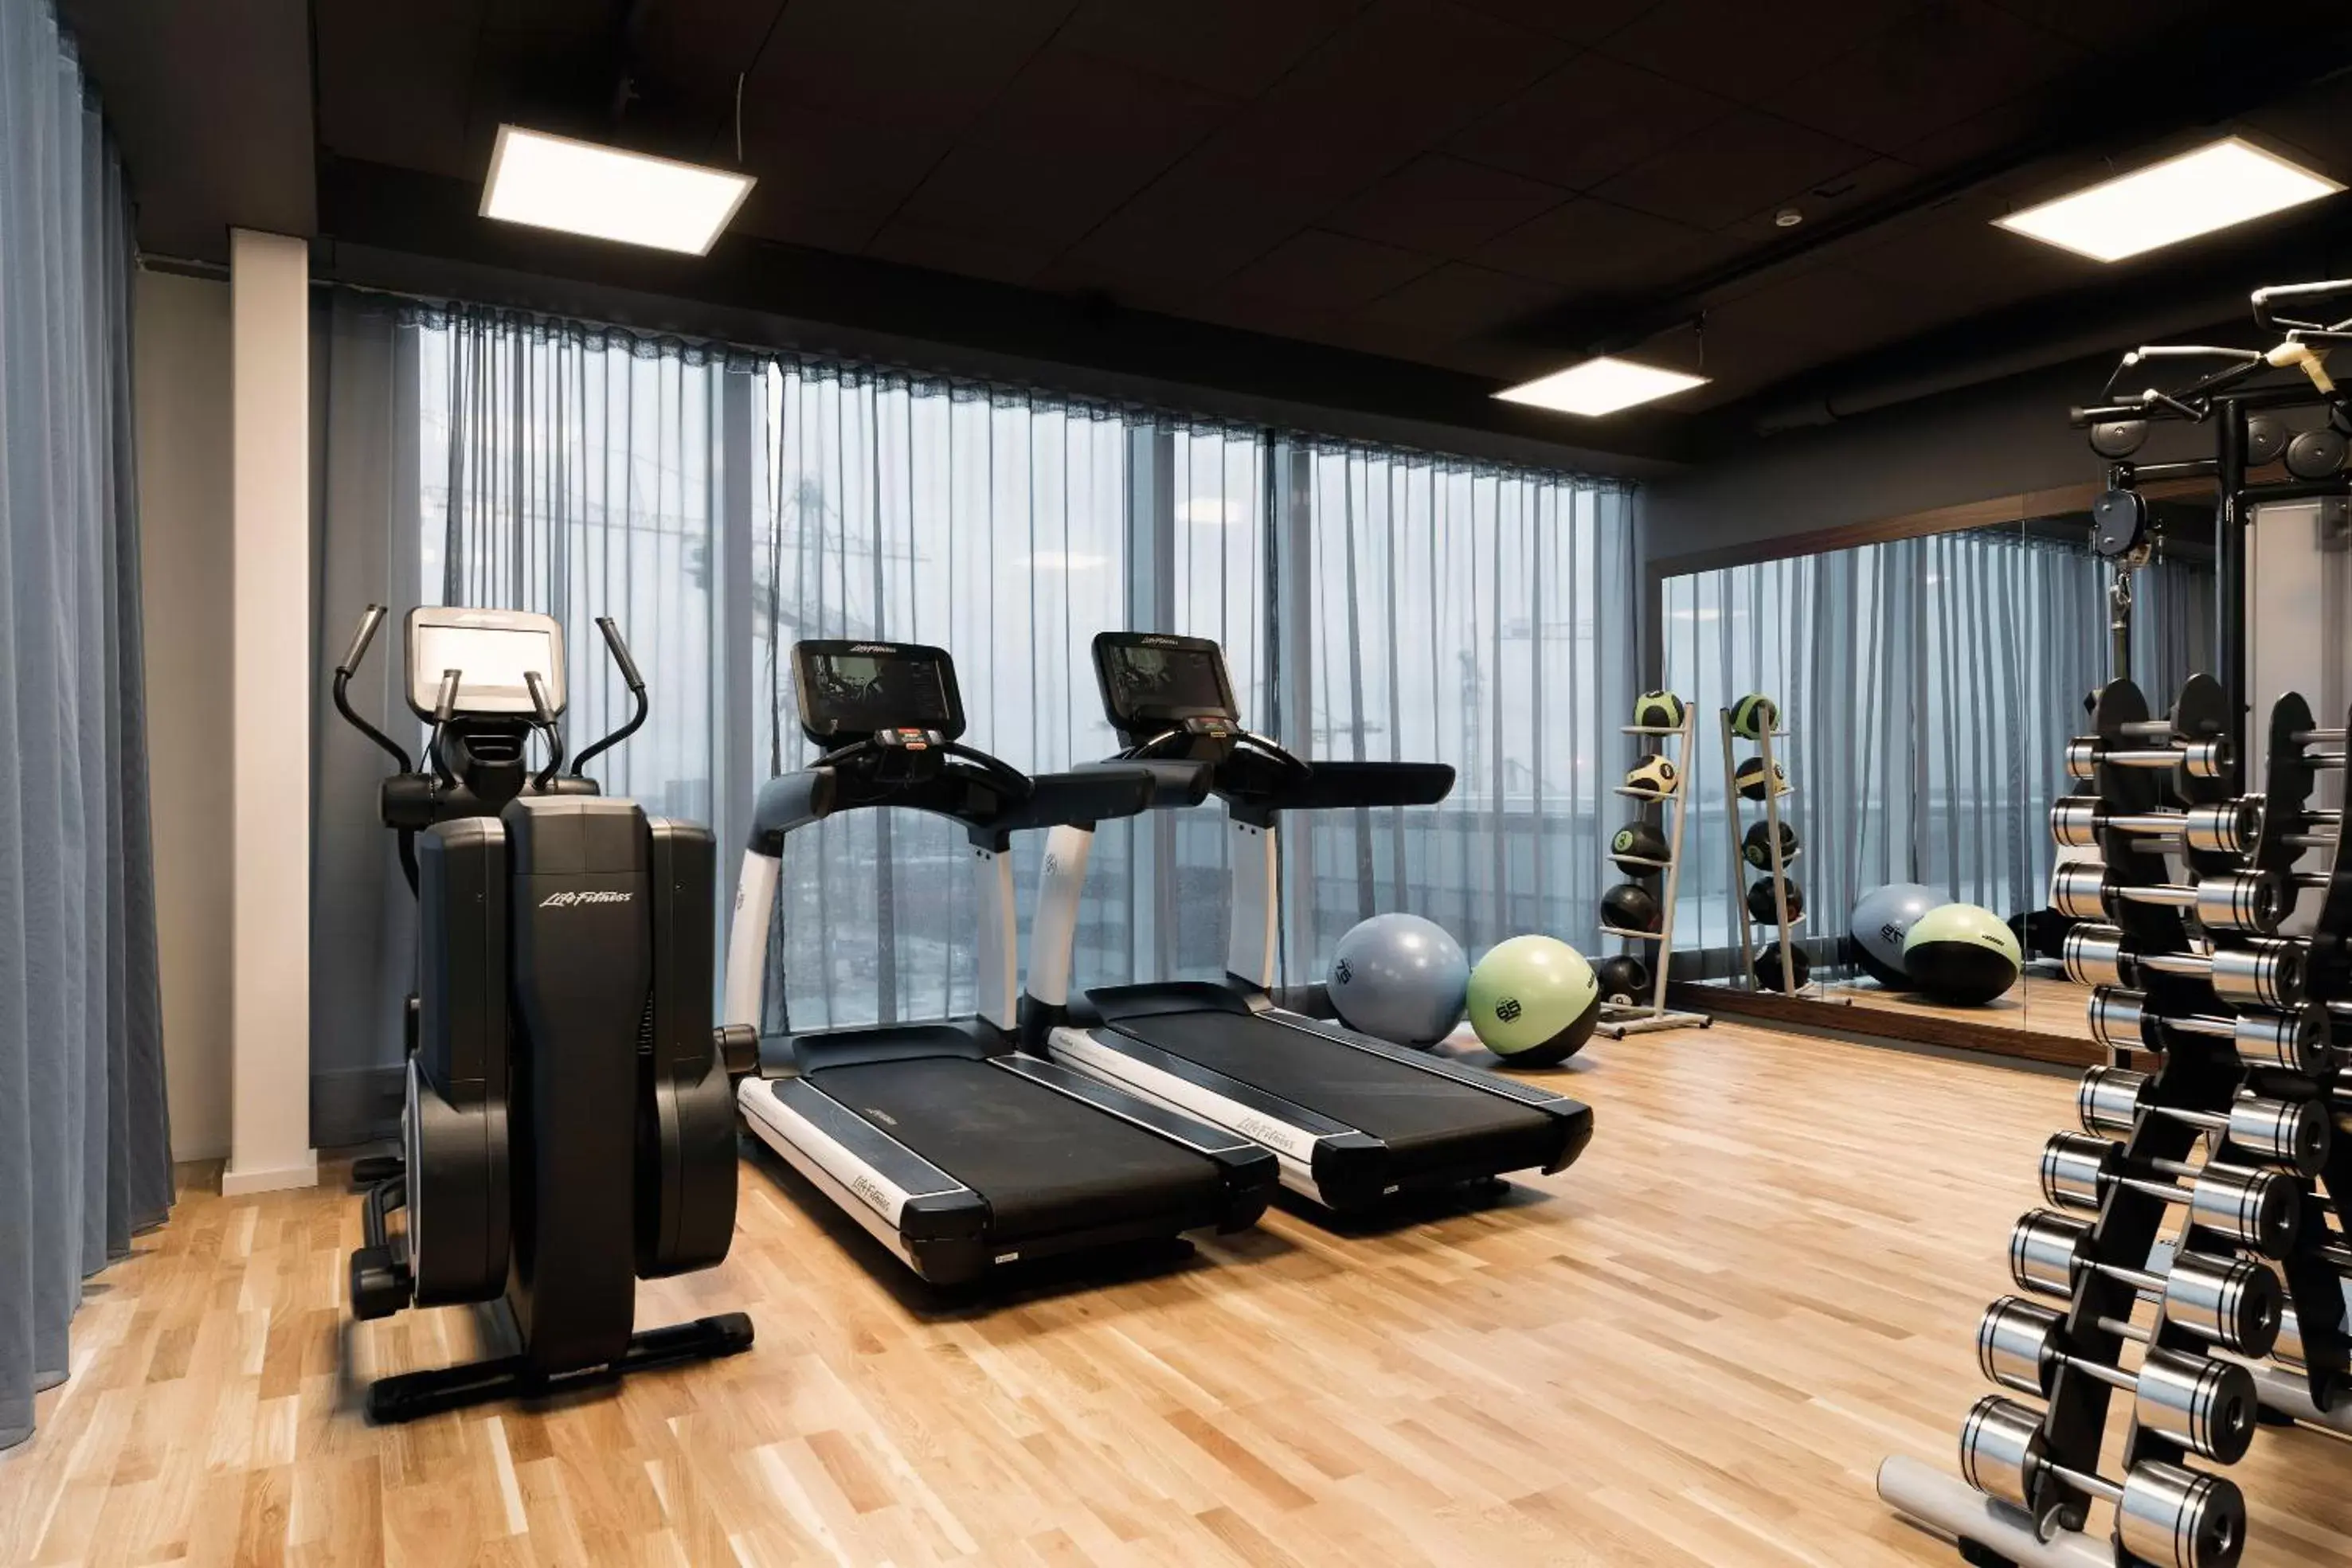 Fitness centre/facilities, Fitness Center/Facilities in Elite Hotel Carolina Tower